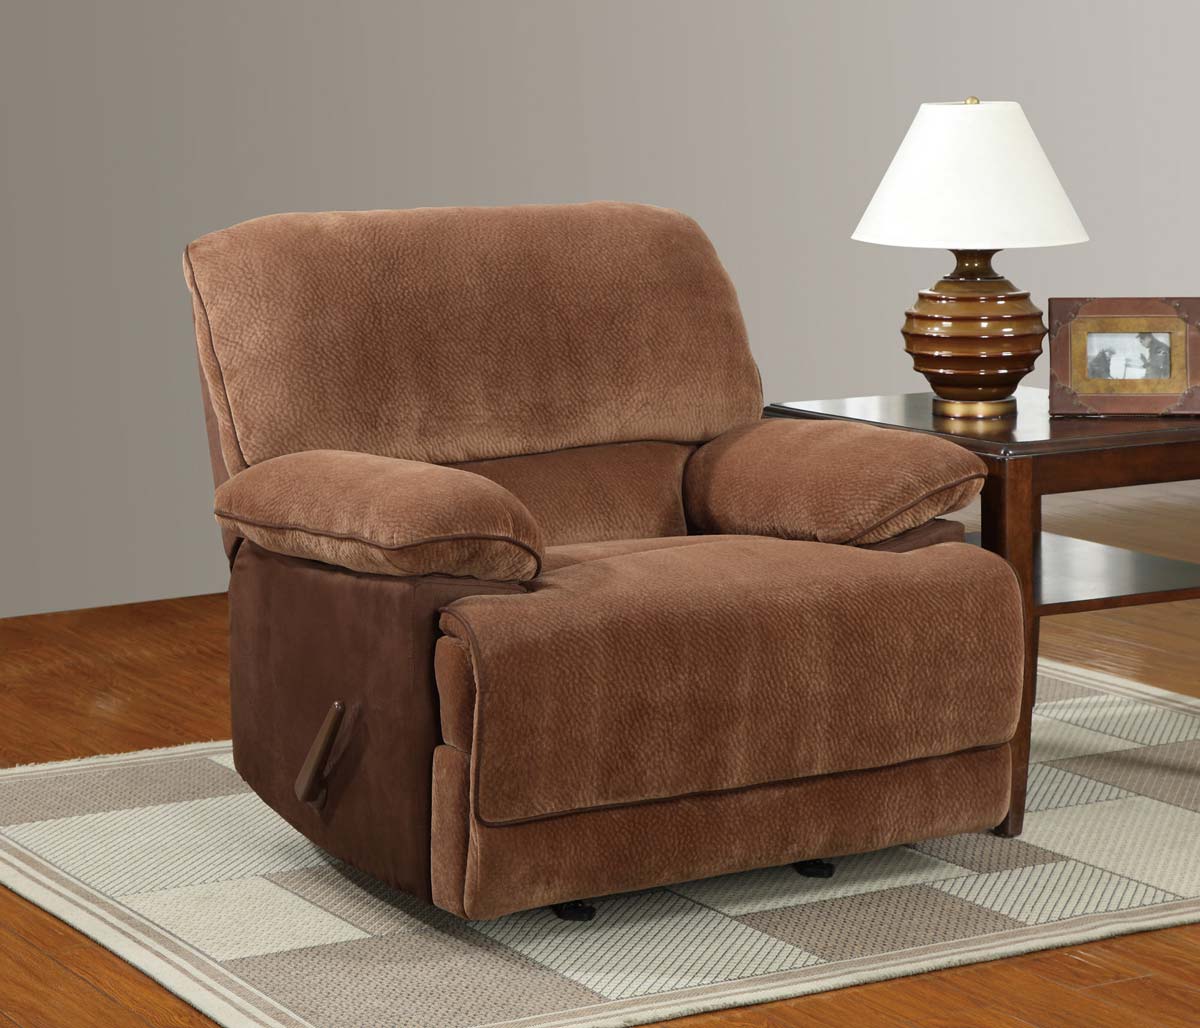 Global Furniture USA 9968 Rocker Recliner Chair - Champion - Brown Sugar